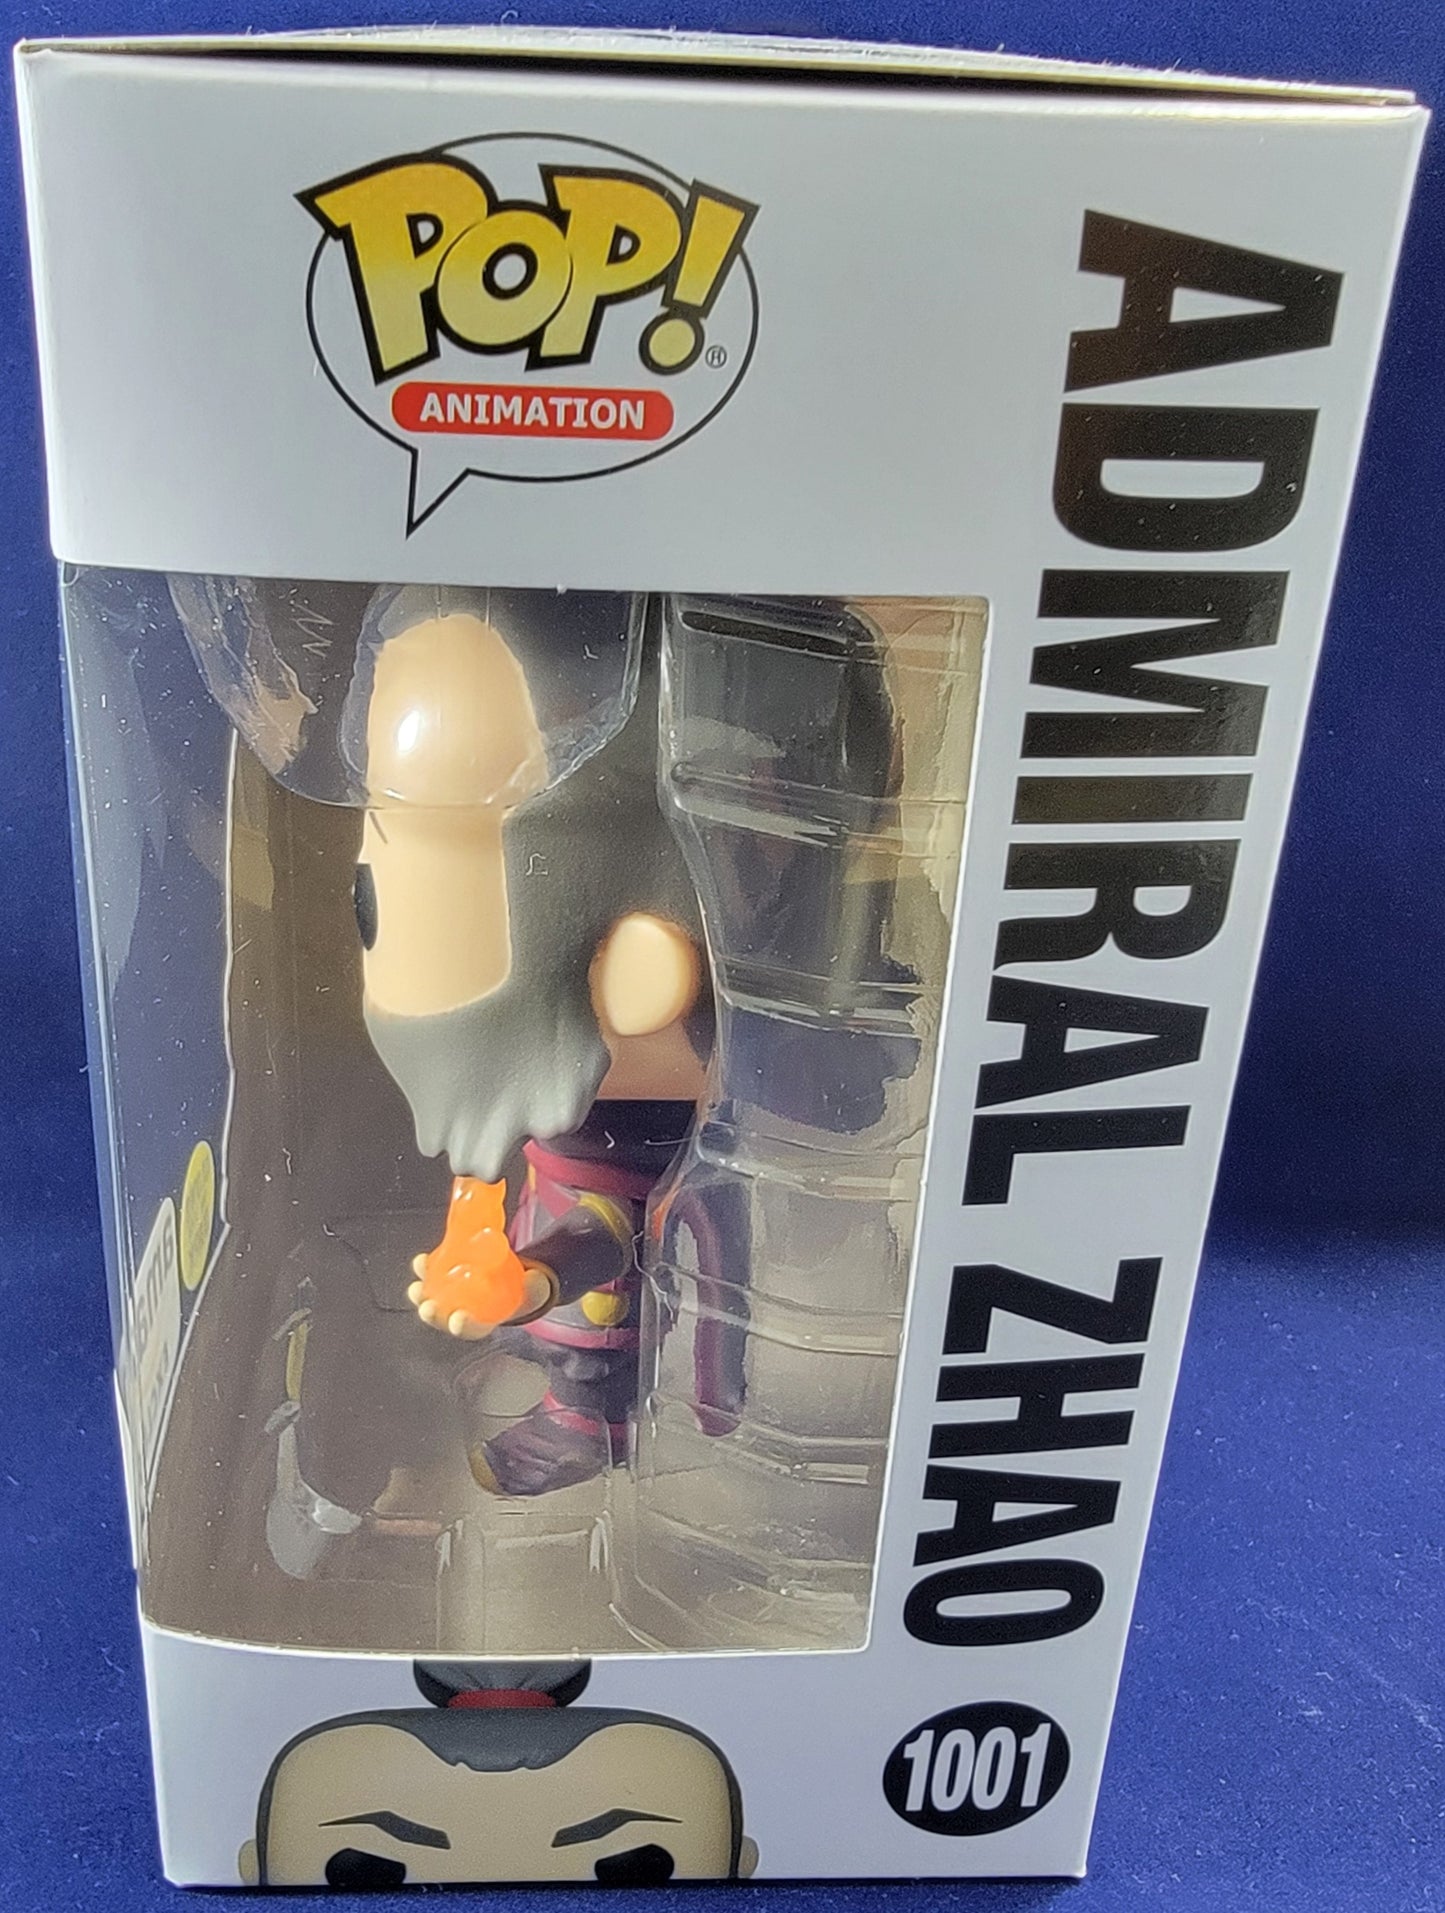 Admiral Zhao amazon exclusive funko # 1001 (nib)
With pop protector